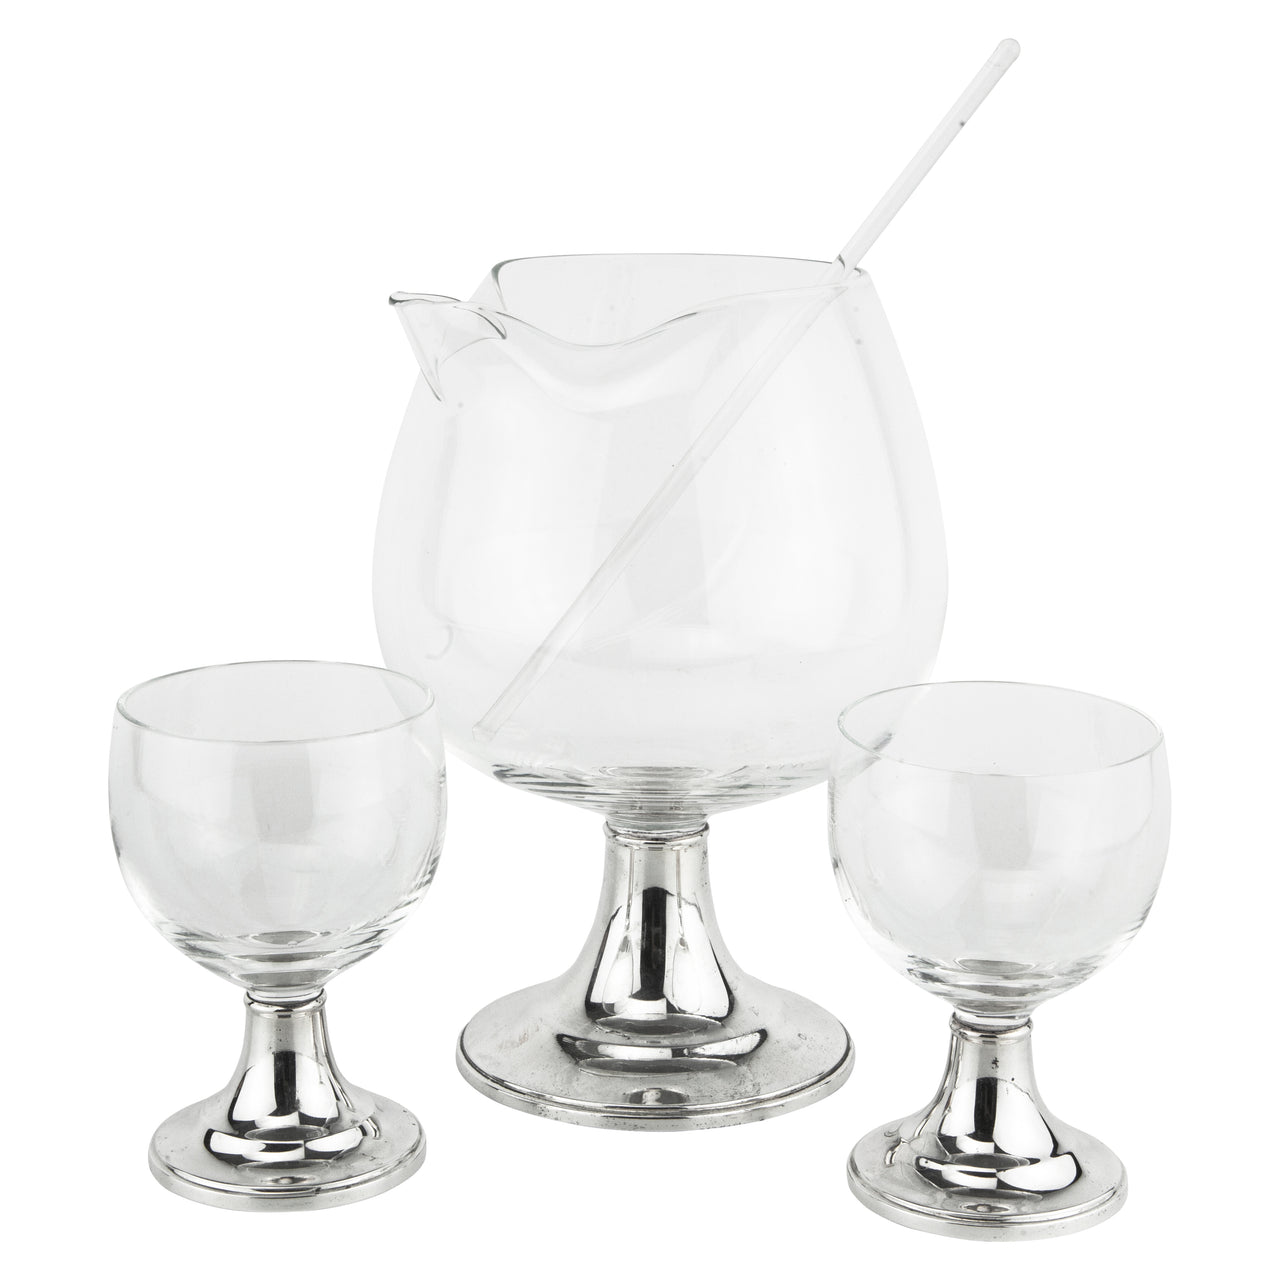 Victorian Cocktail Cup - 2 pcs